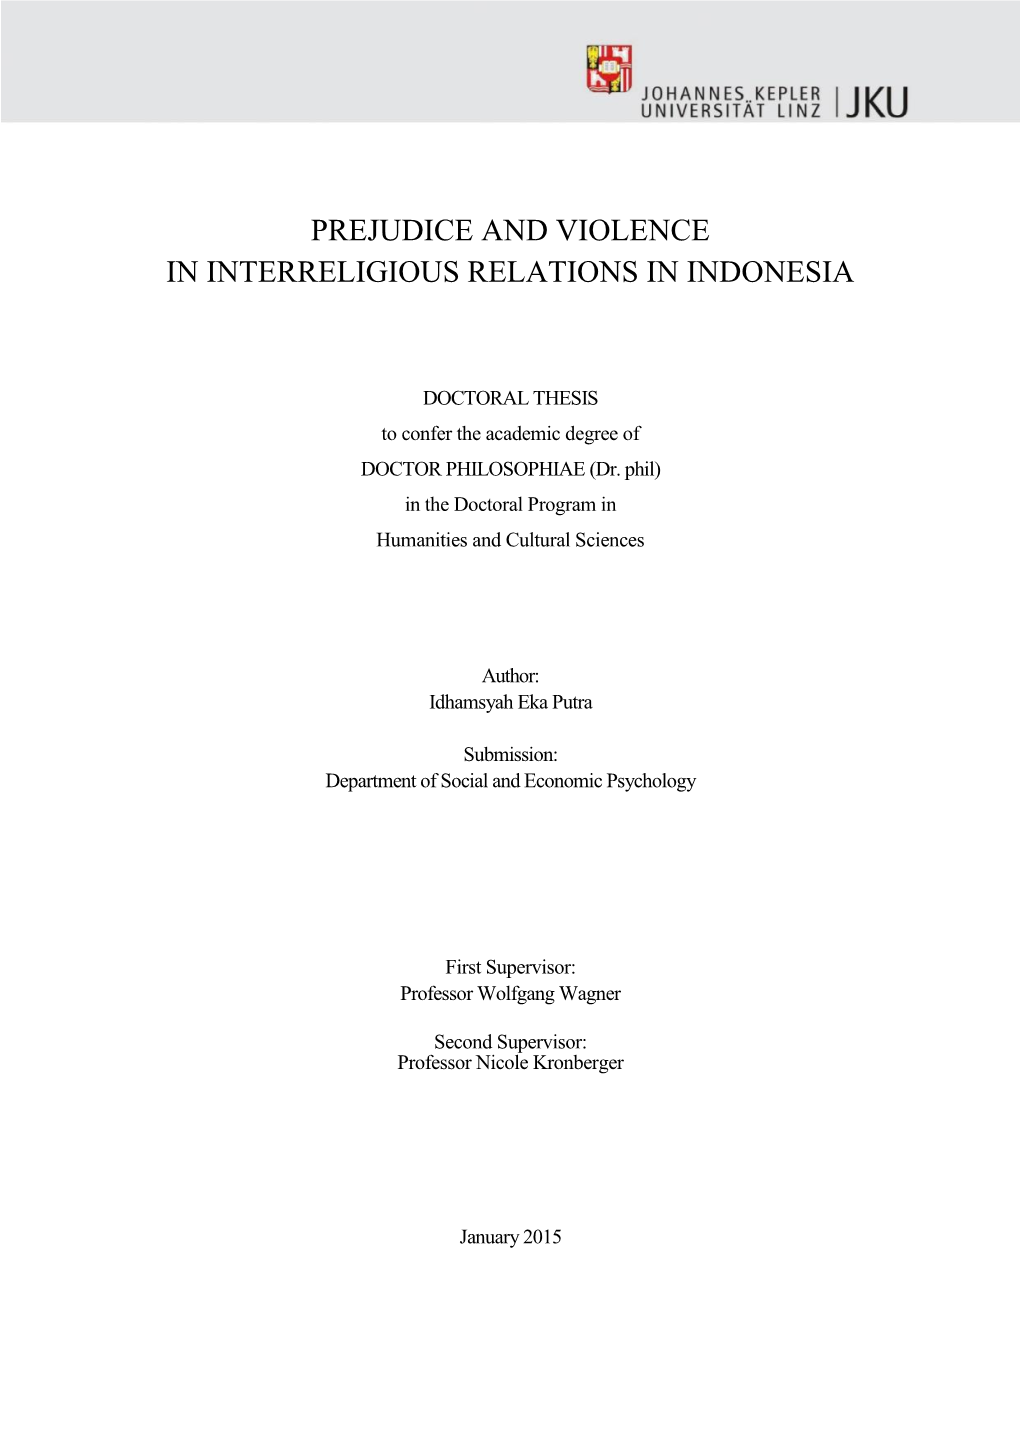 Prejudice and Violence in Interreligious Relations in Indonesia